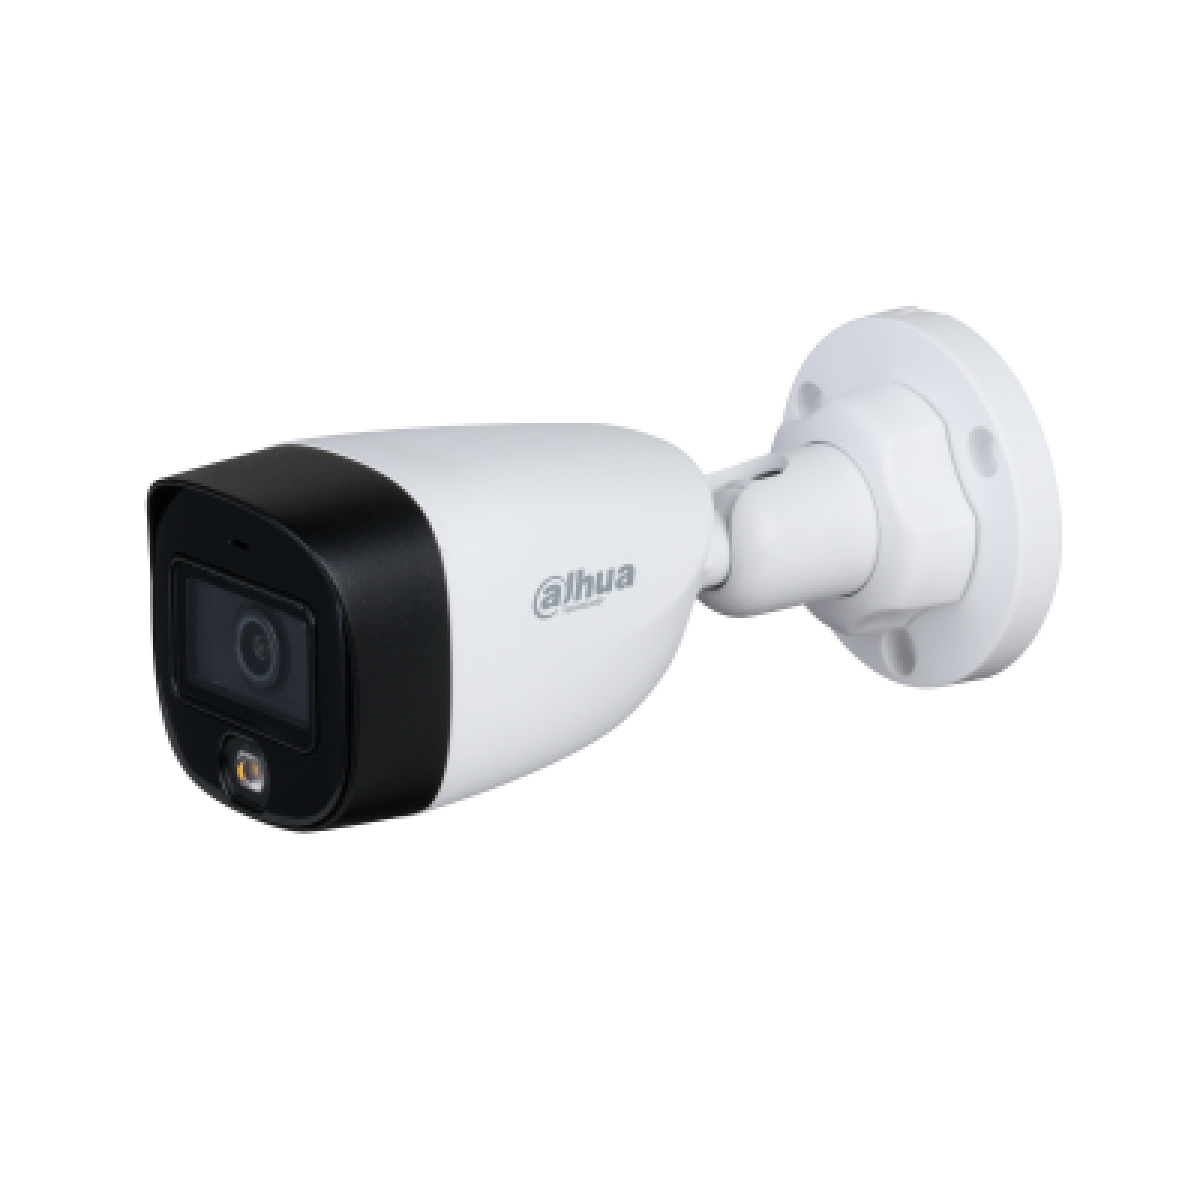 Dahua DH-HAC-HFW1209C-LED 2MP Full-color Starlight HDCVI Bullet Camera (2.8mm)